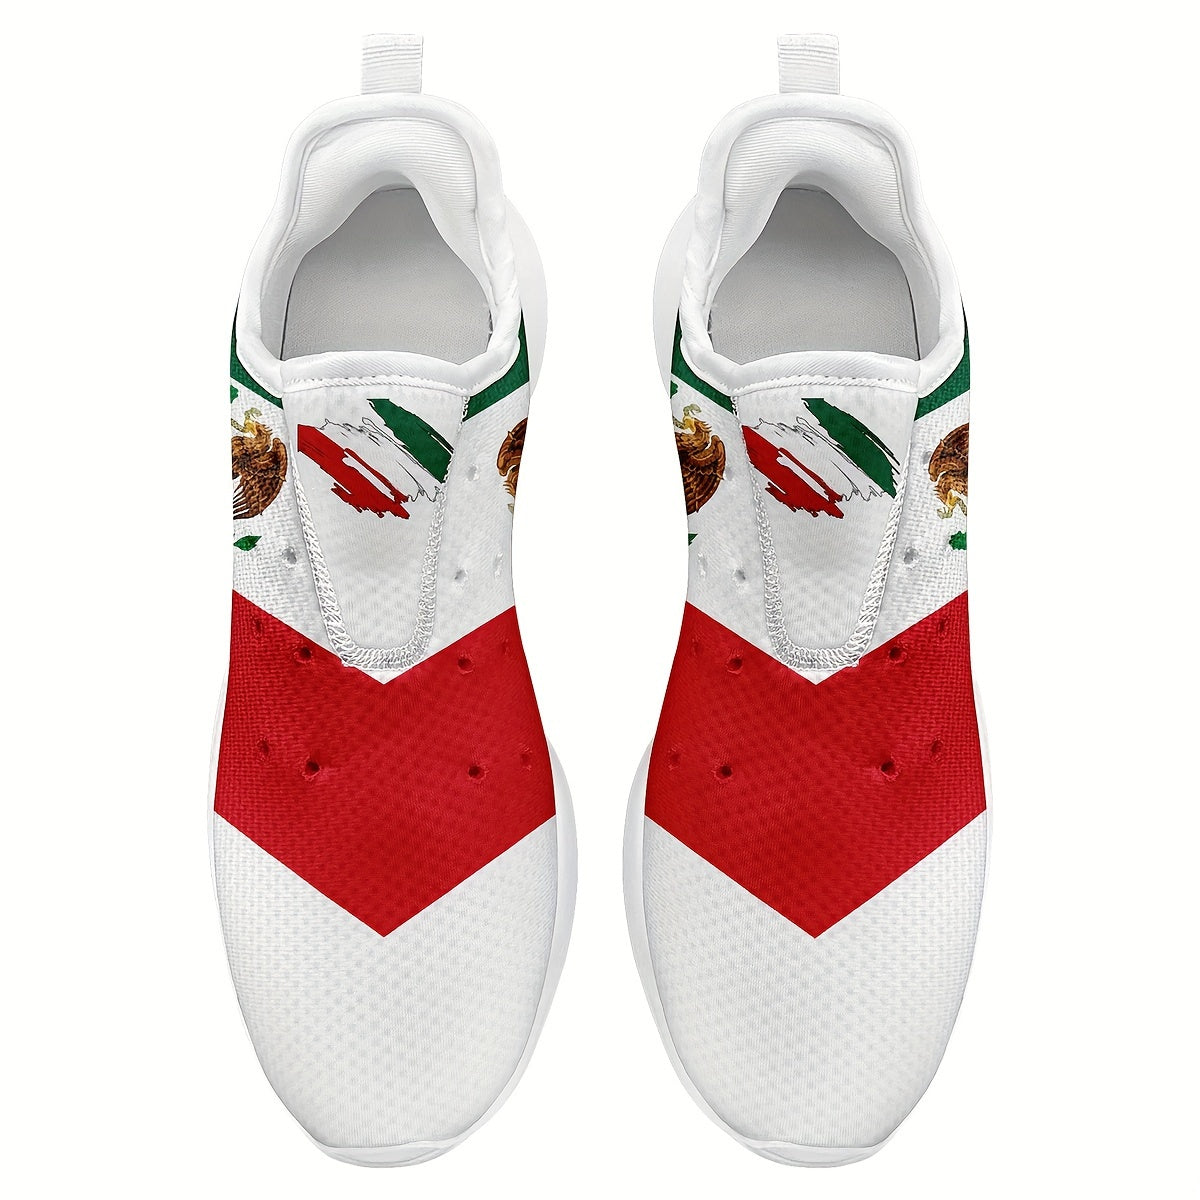 Plus Size Men's Mexico Pattern Sneakers, Soft Sole